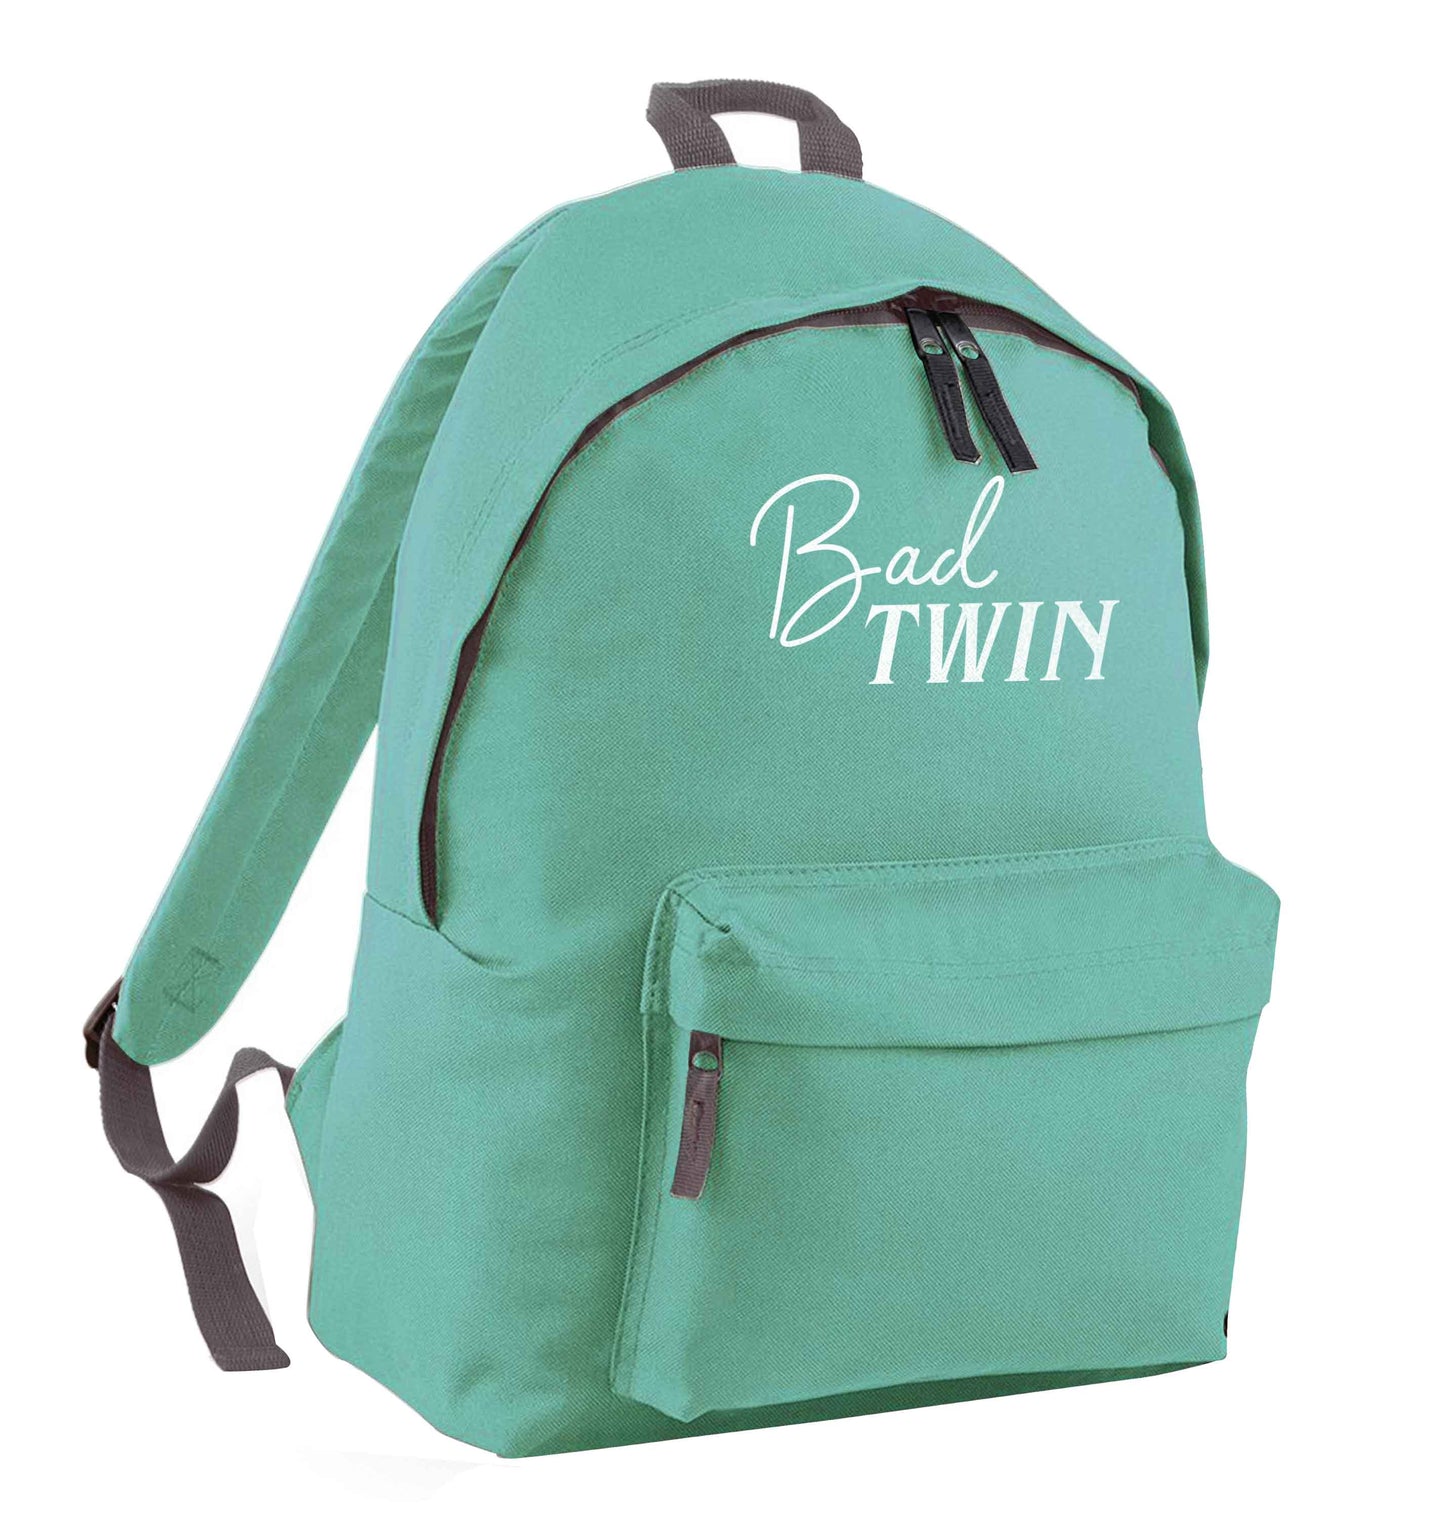 Bad twin mint adults backpack